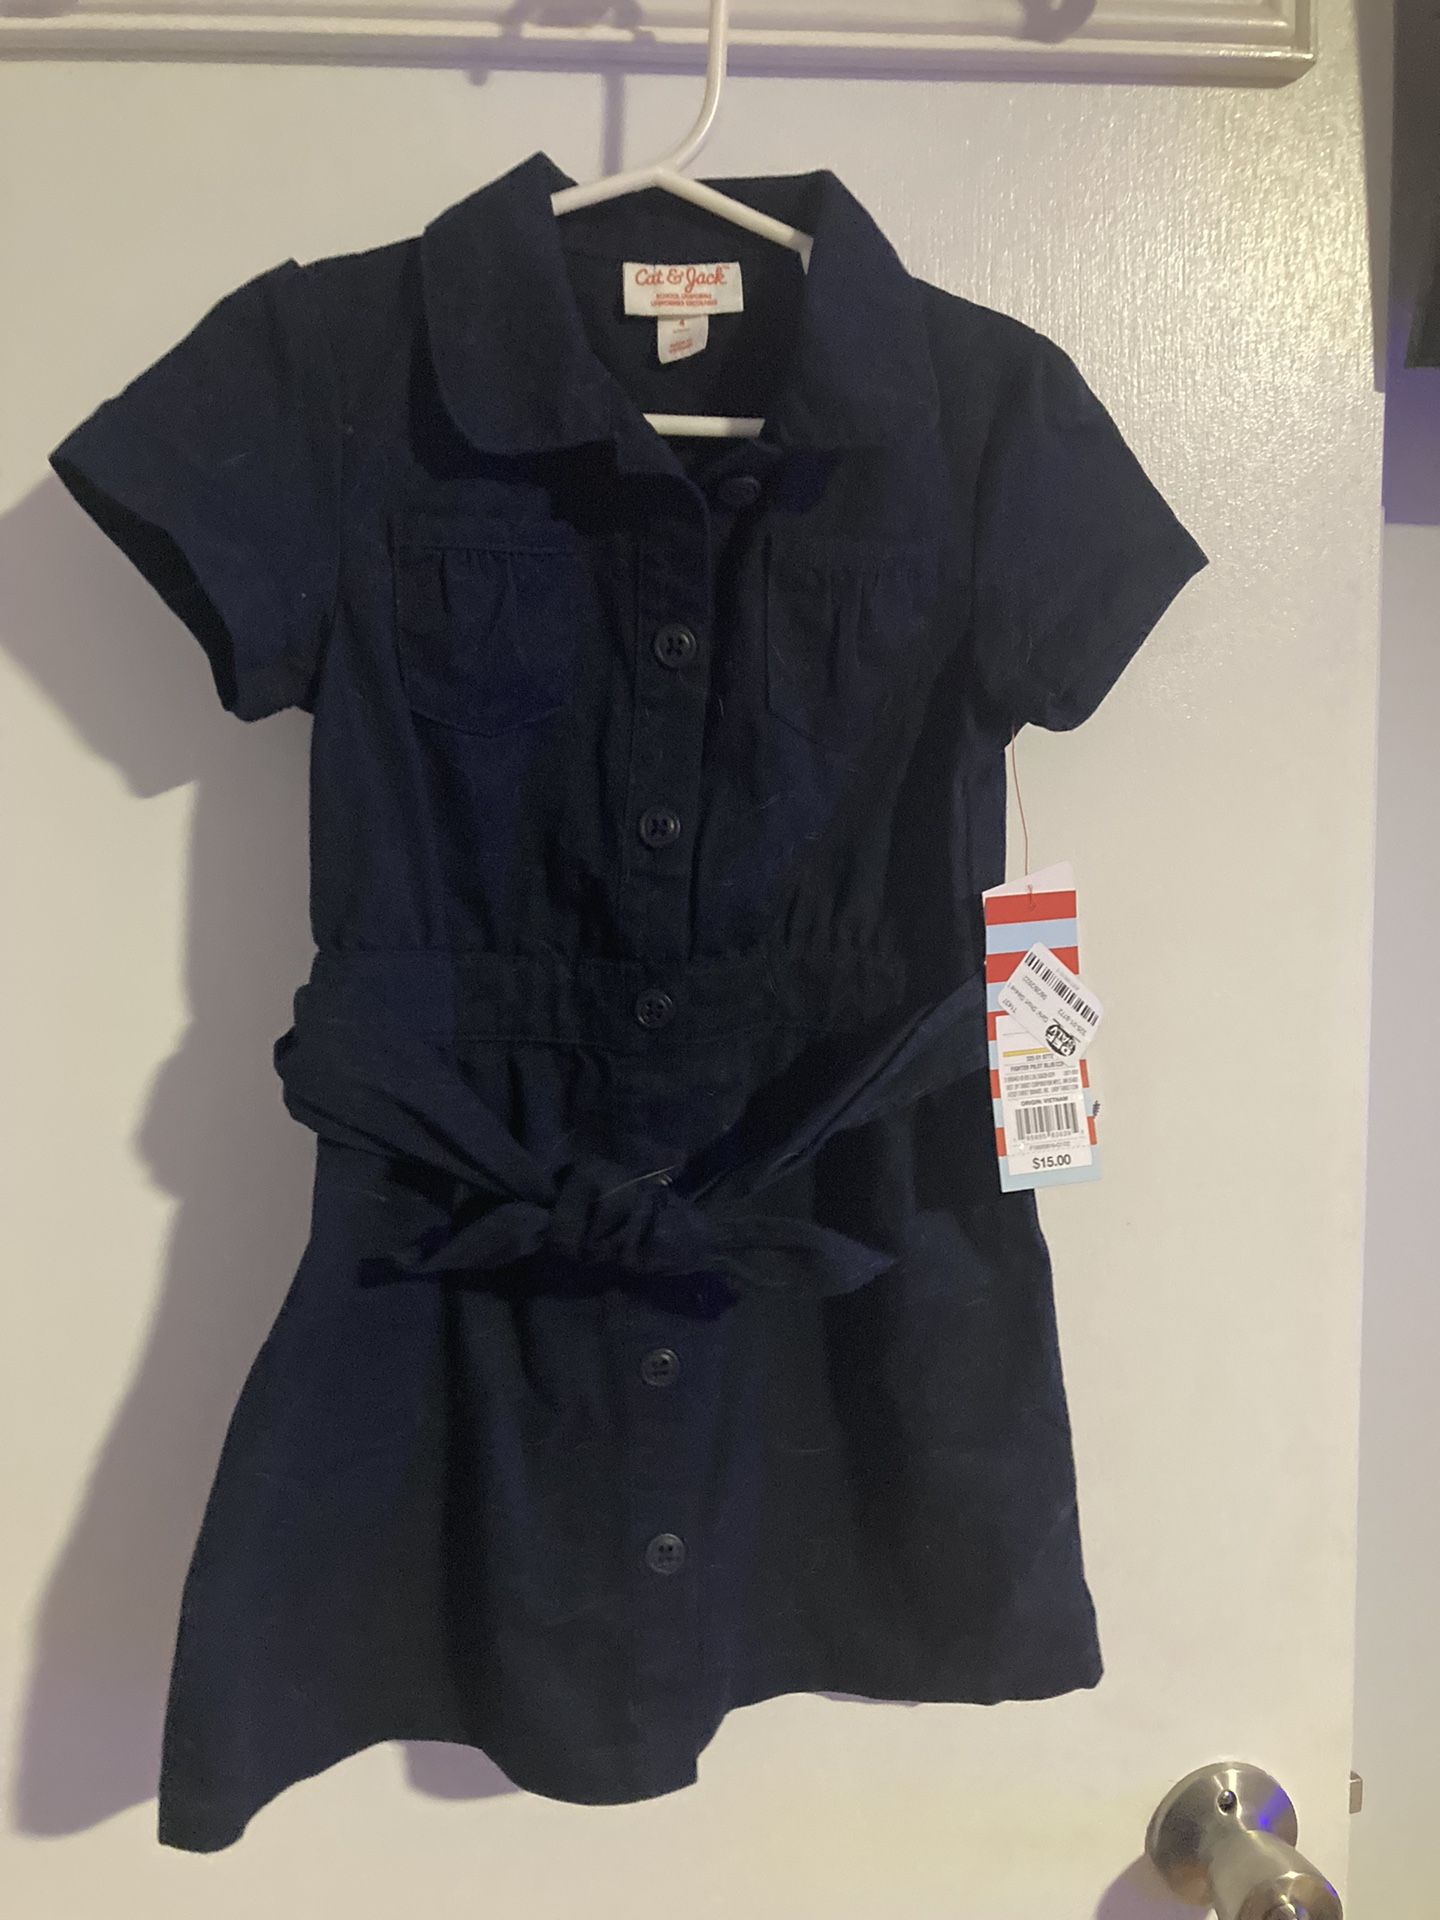 Cat & Jack School Uniform Dress